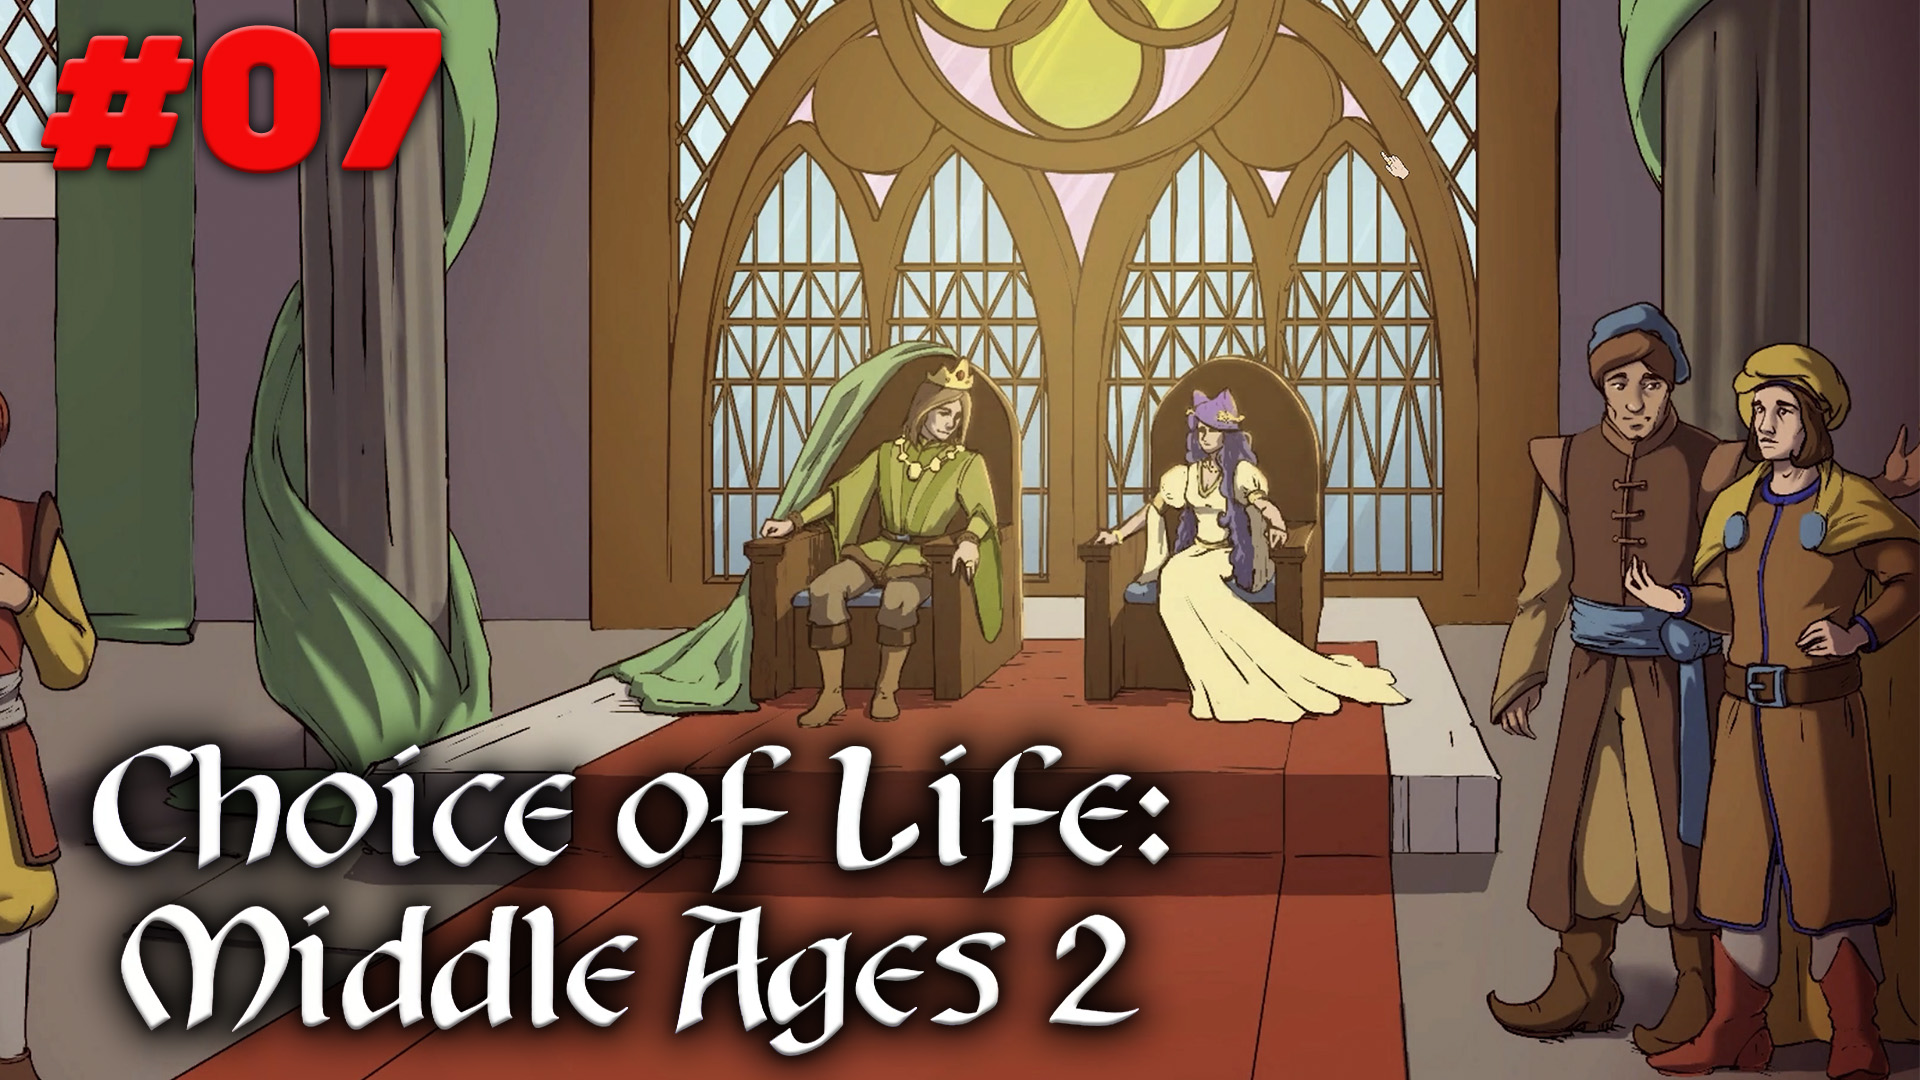 Choice of life игра. The choice of Life Middle ages игра. Choice of Life: Middle ages 2 Элис. Серпантина choice of Life Middle ages 2. Choice of Life: Middle ages Элис.